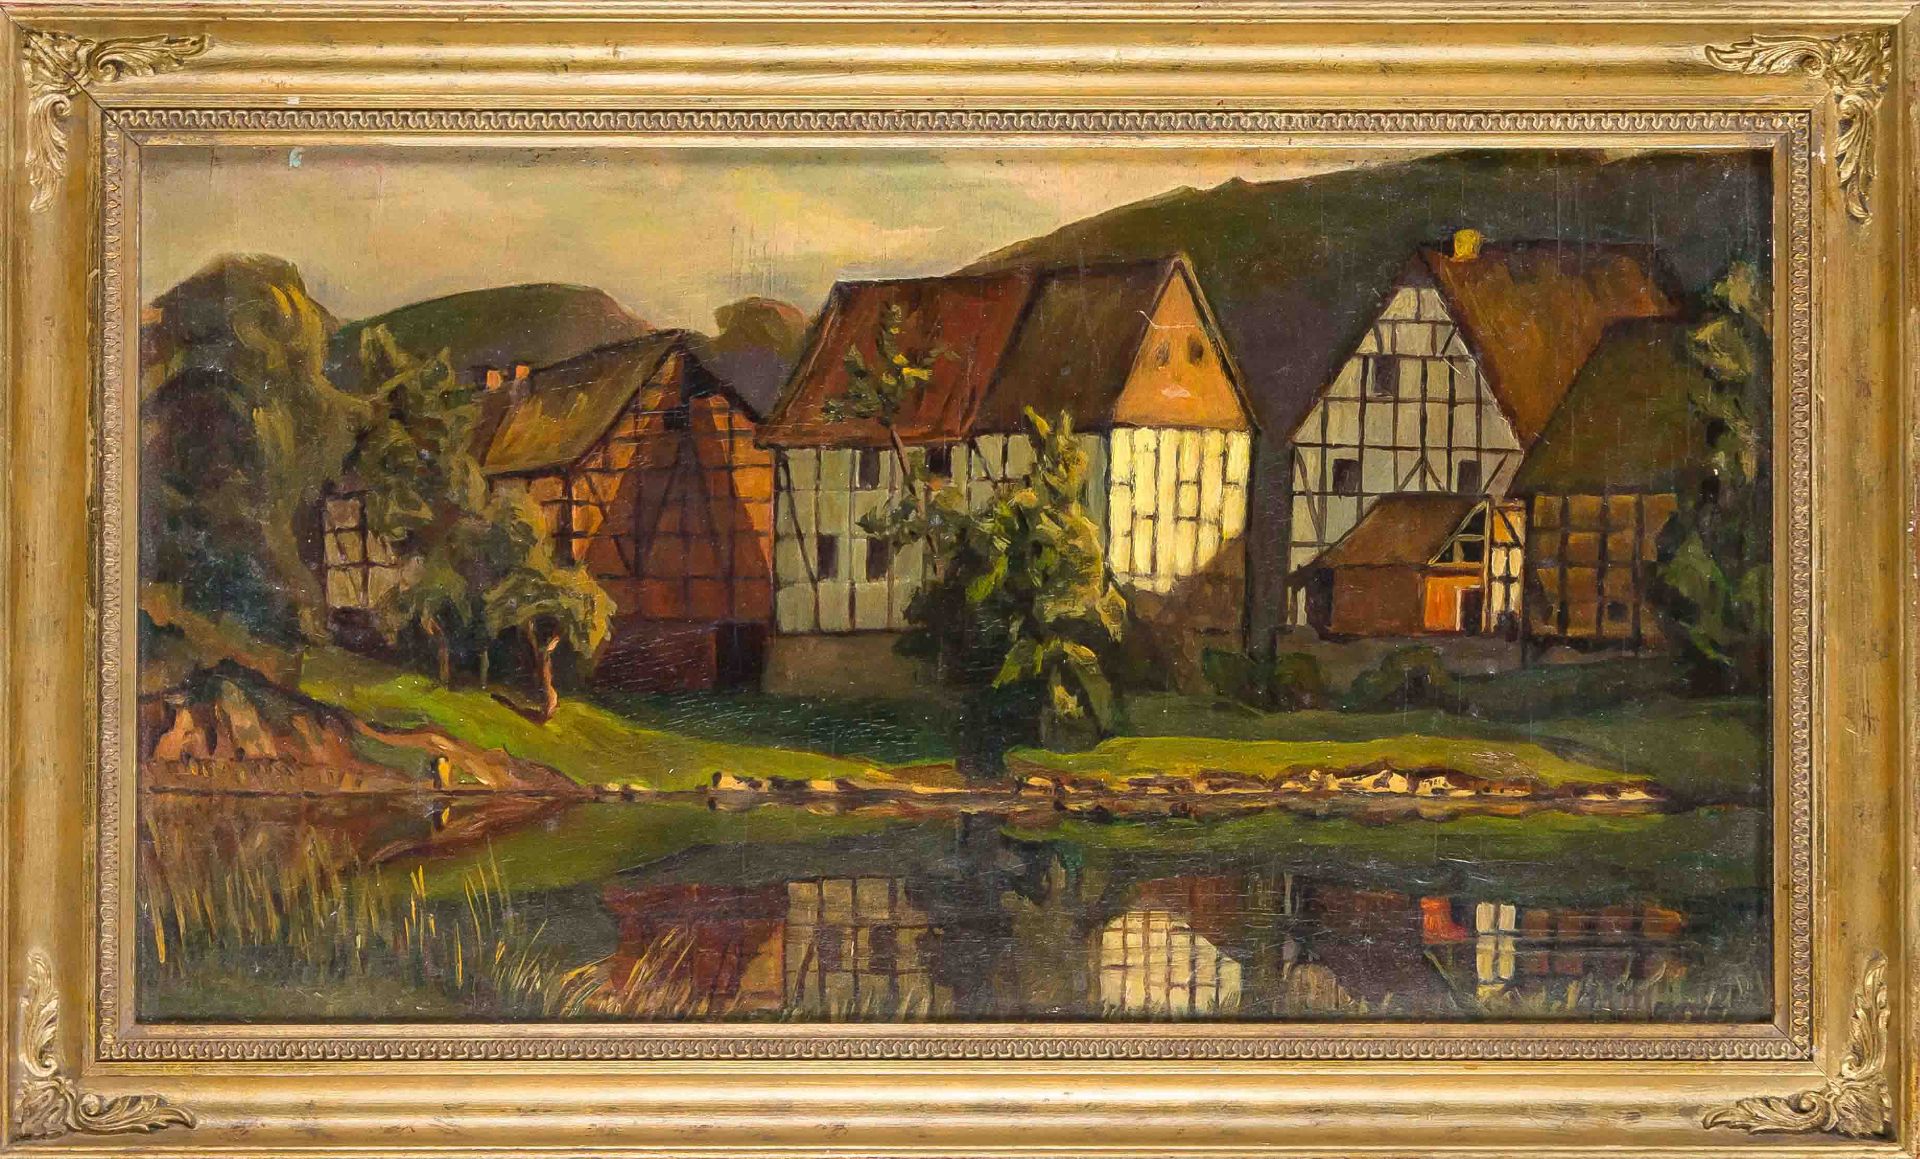 Georg Michael Meinzolt (1863-1948), landscape painter from Hamburg. View of a village with half-